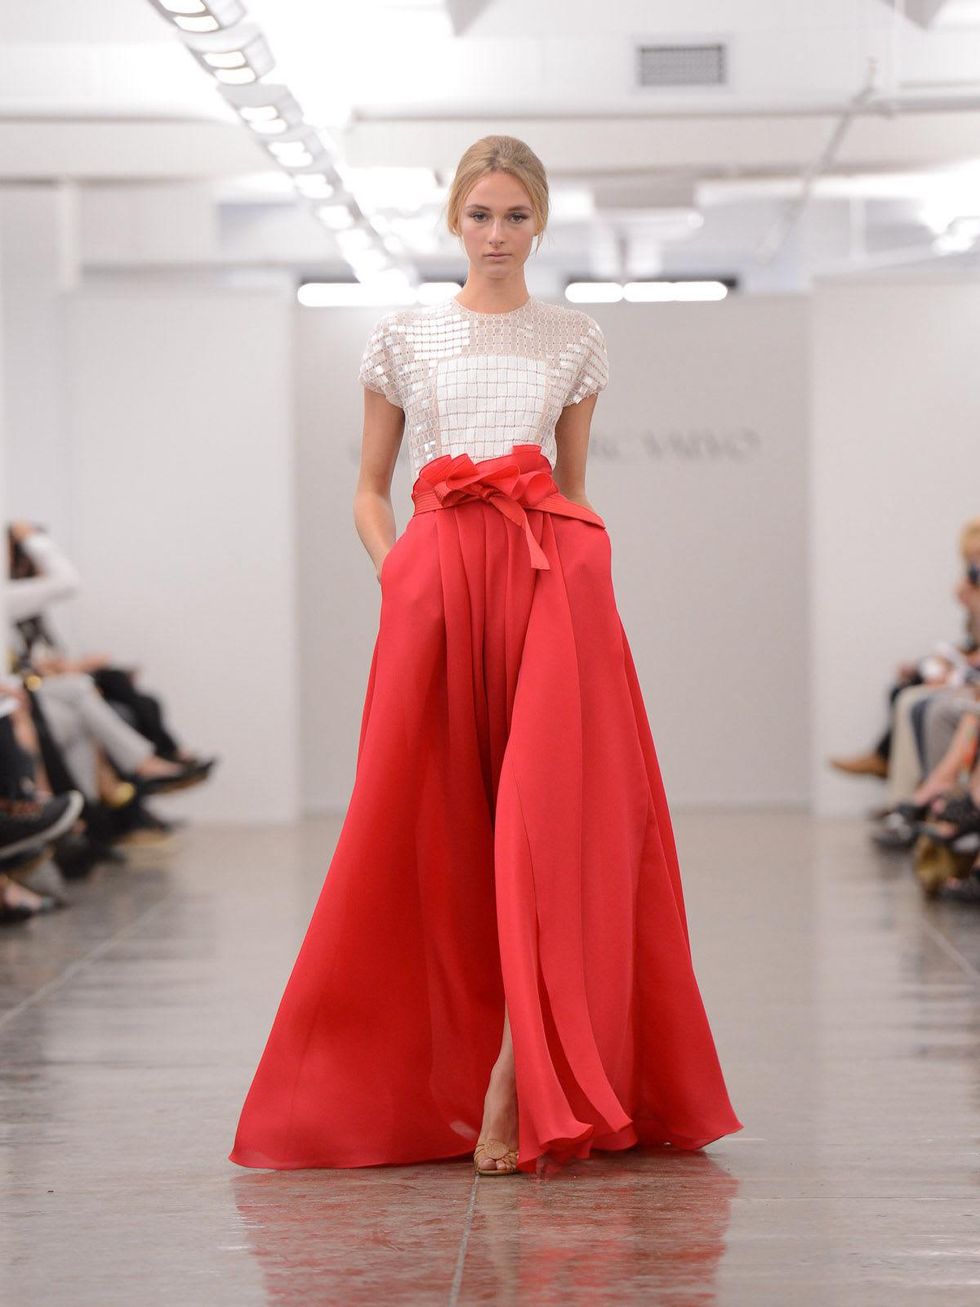 Clifford, Fashion Week spring 2013, September 2012, Carmen Marc Valvo, red skirt gown